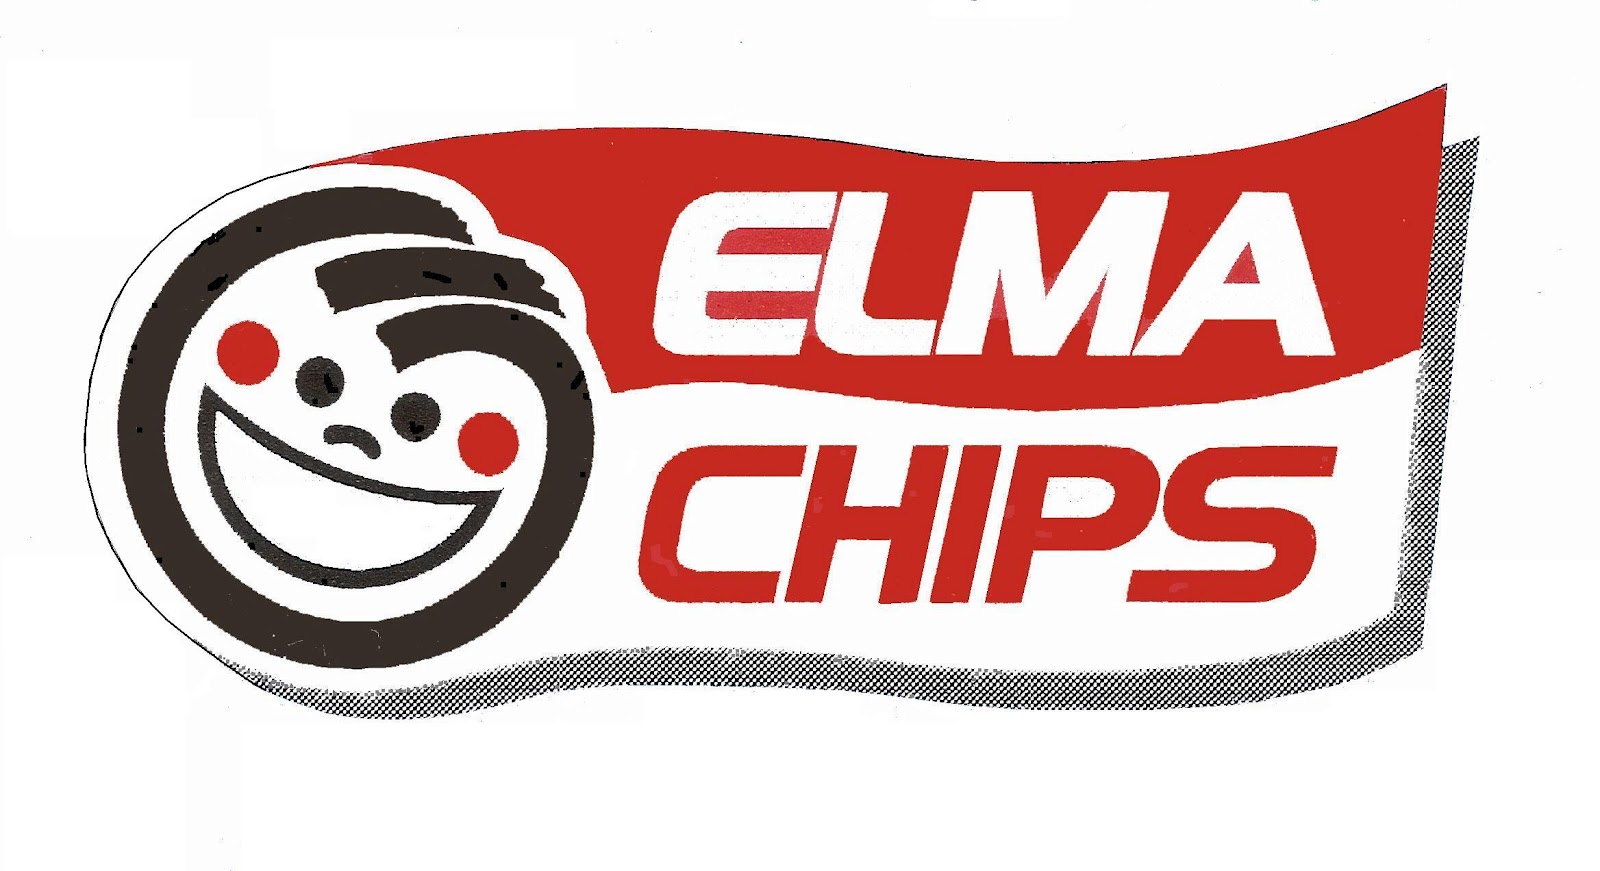 Brand elma chips